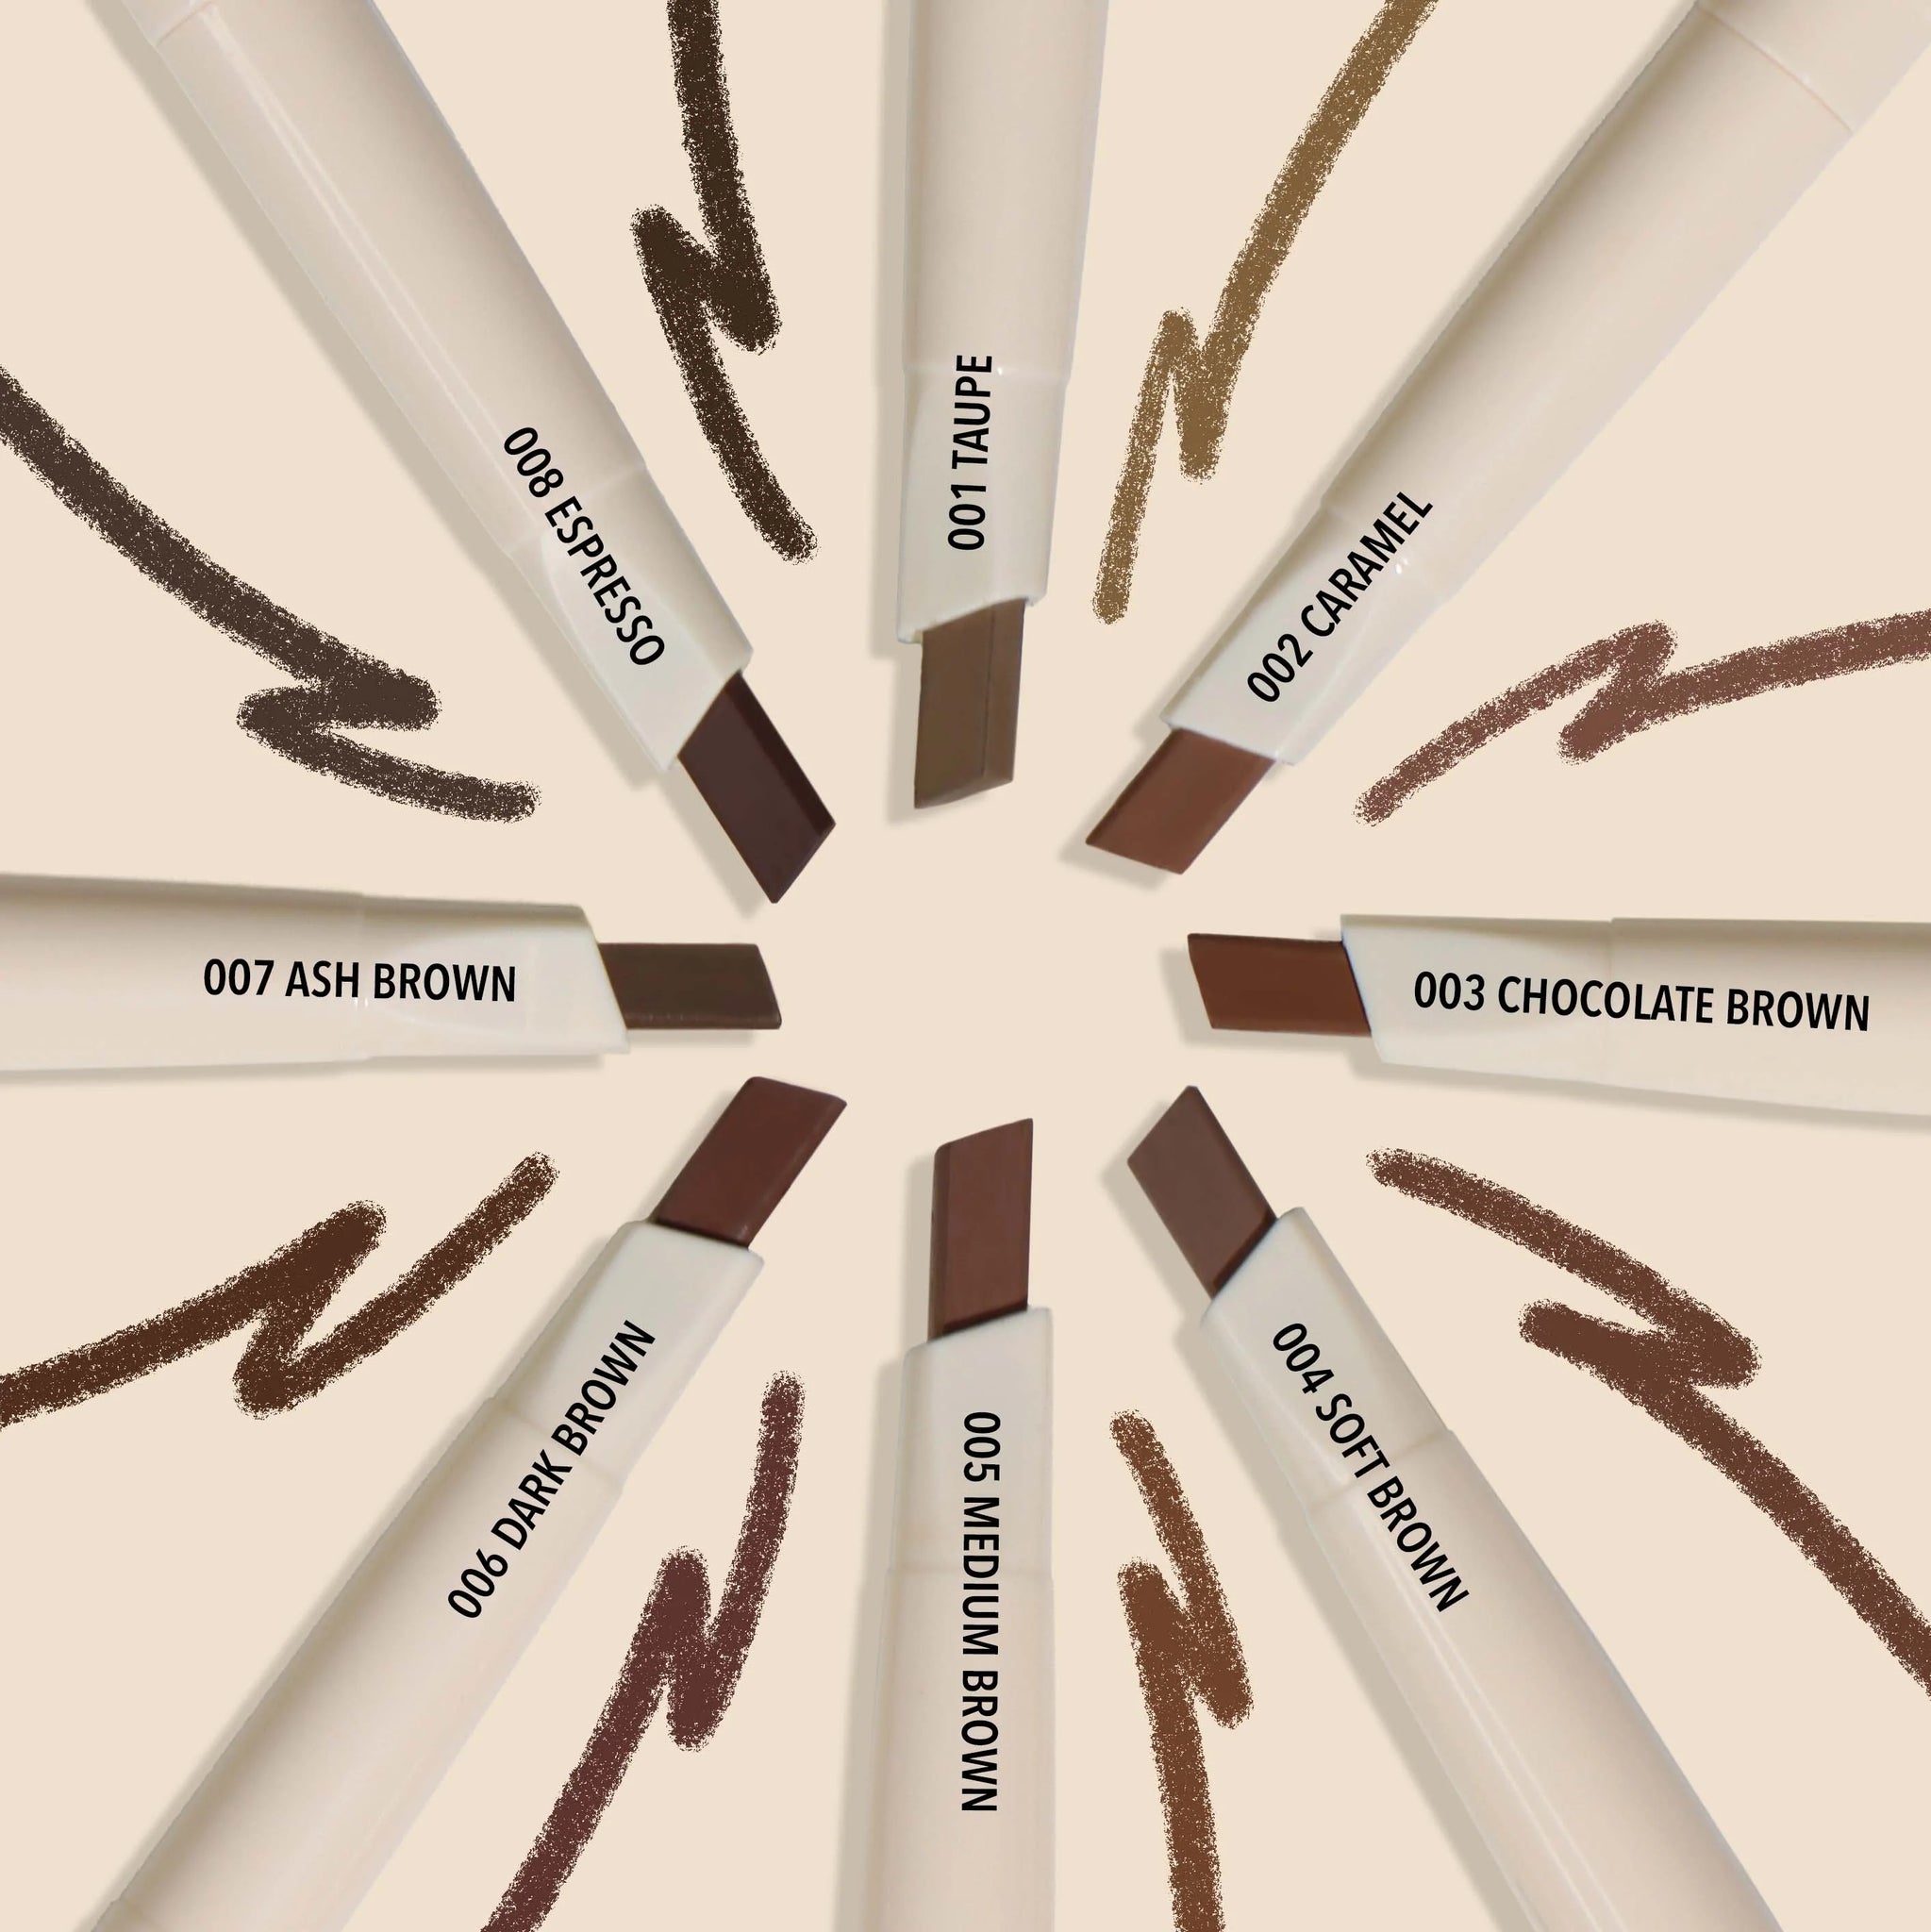 Moira Angled Brow Pencil: Medium Brown